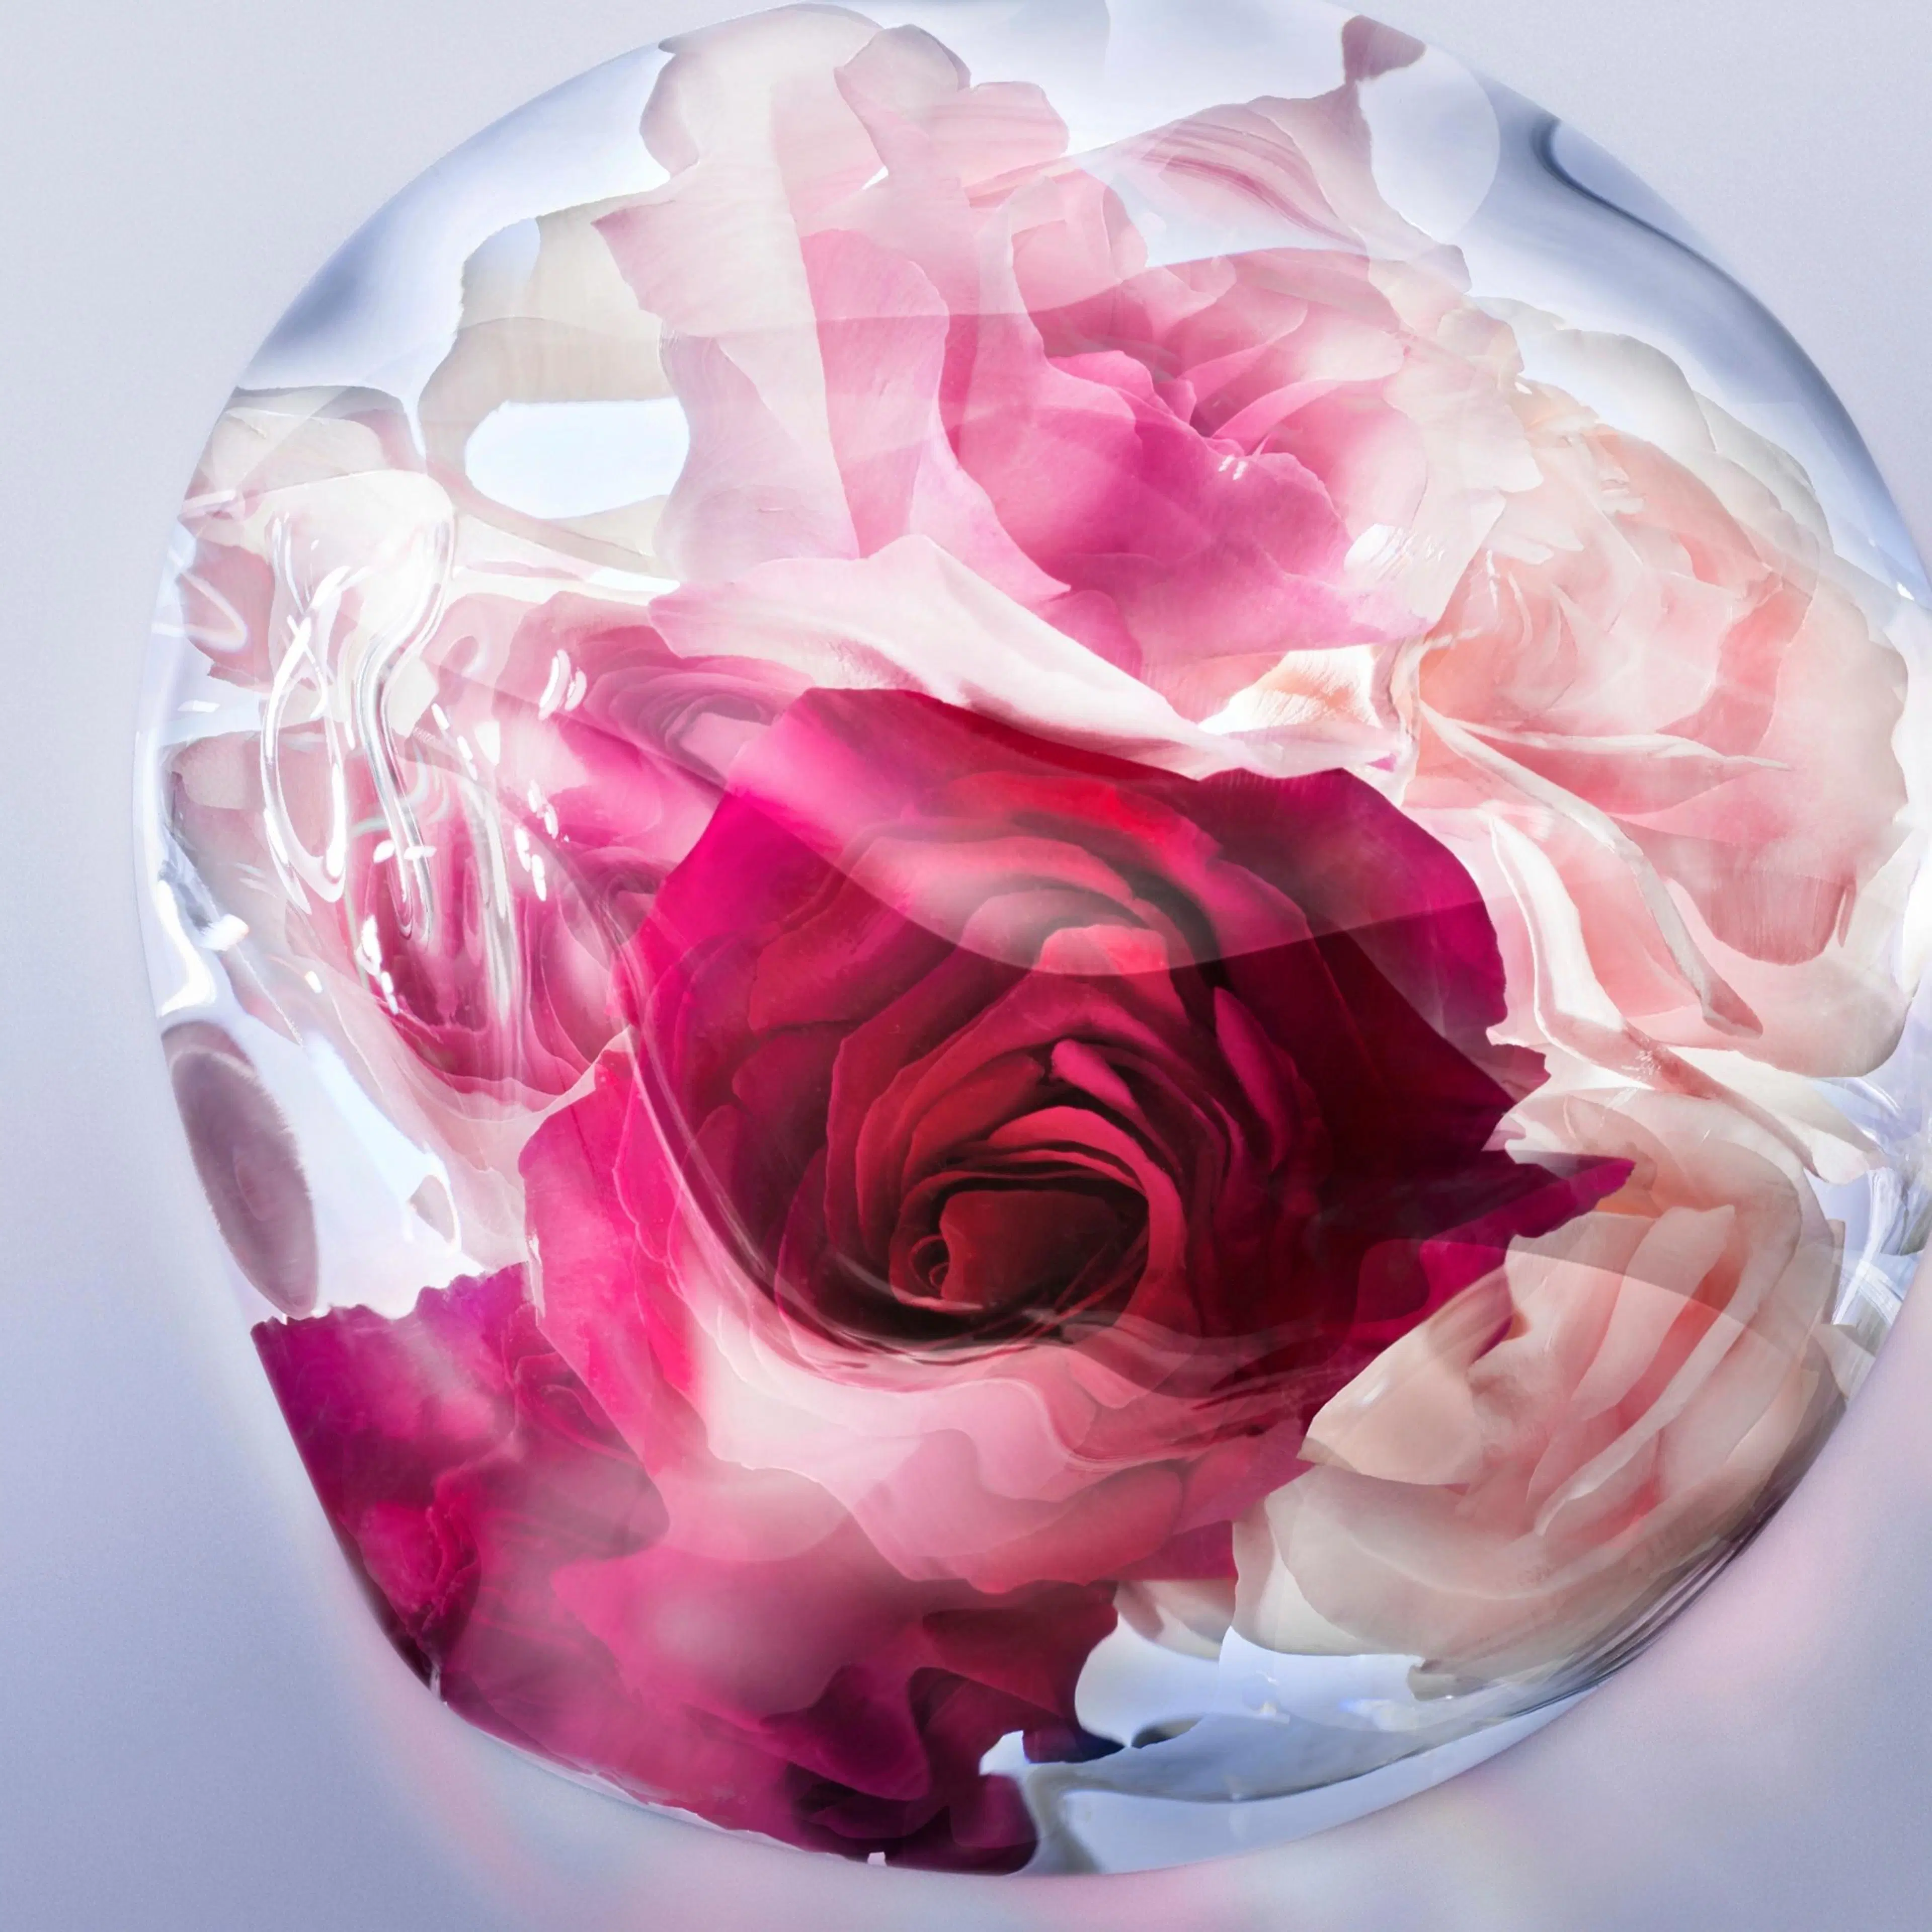 Lancôme La Vie est Belle Rose Extraordinaire EdP tuoksu 30 ml